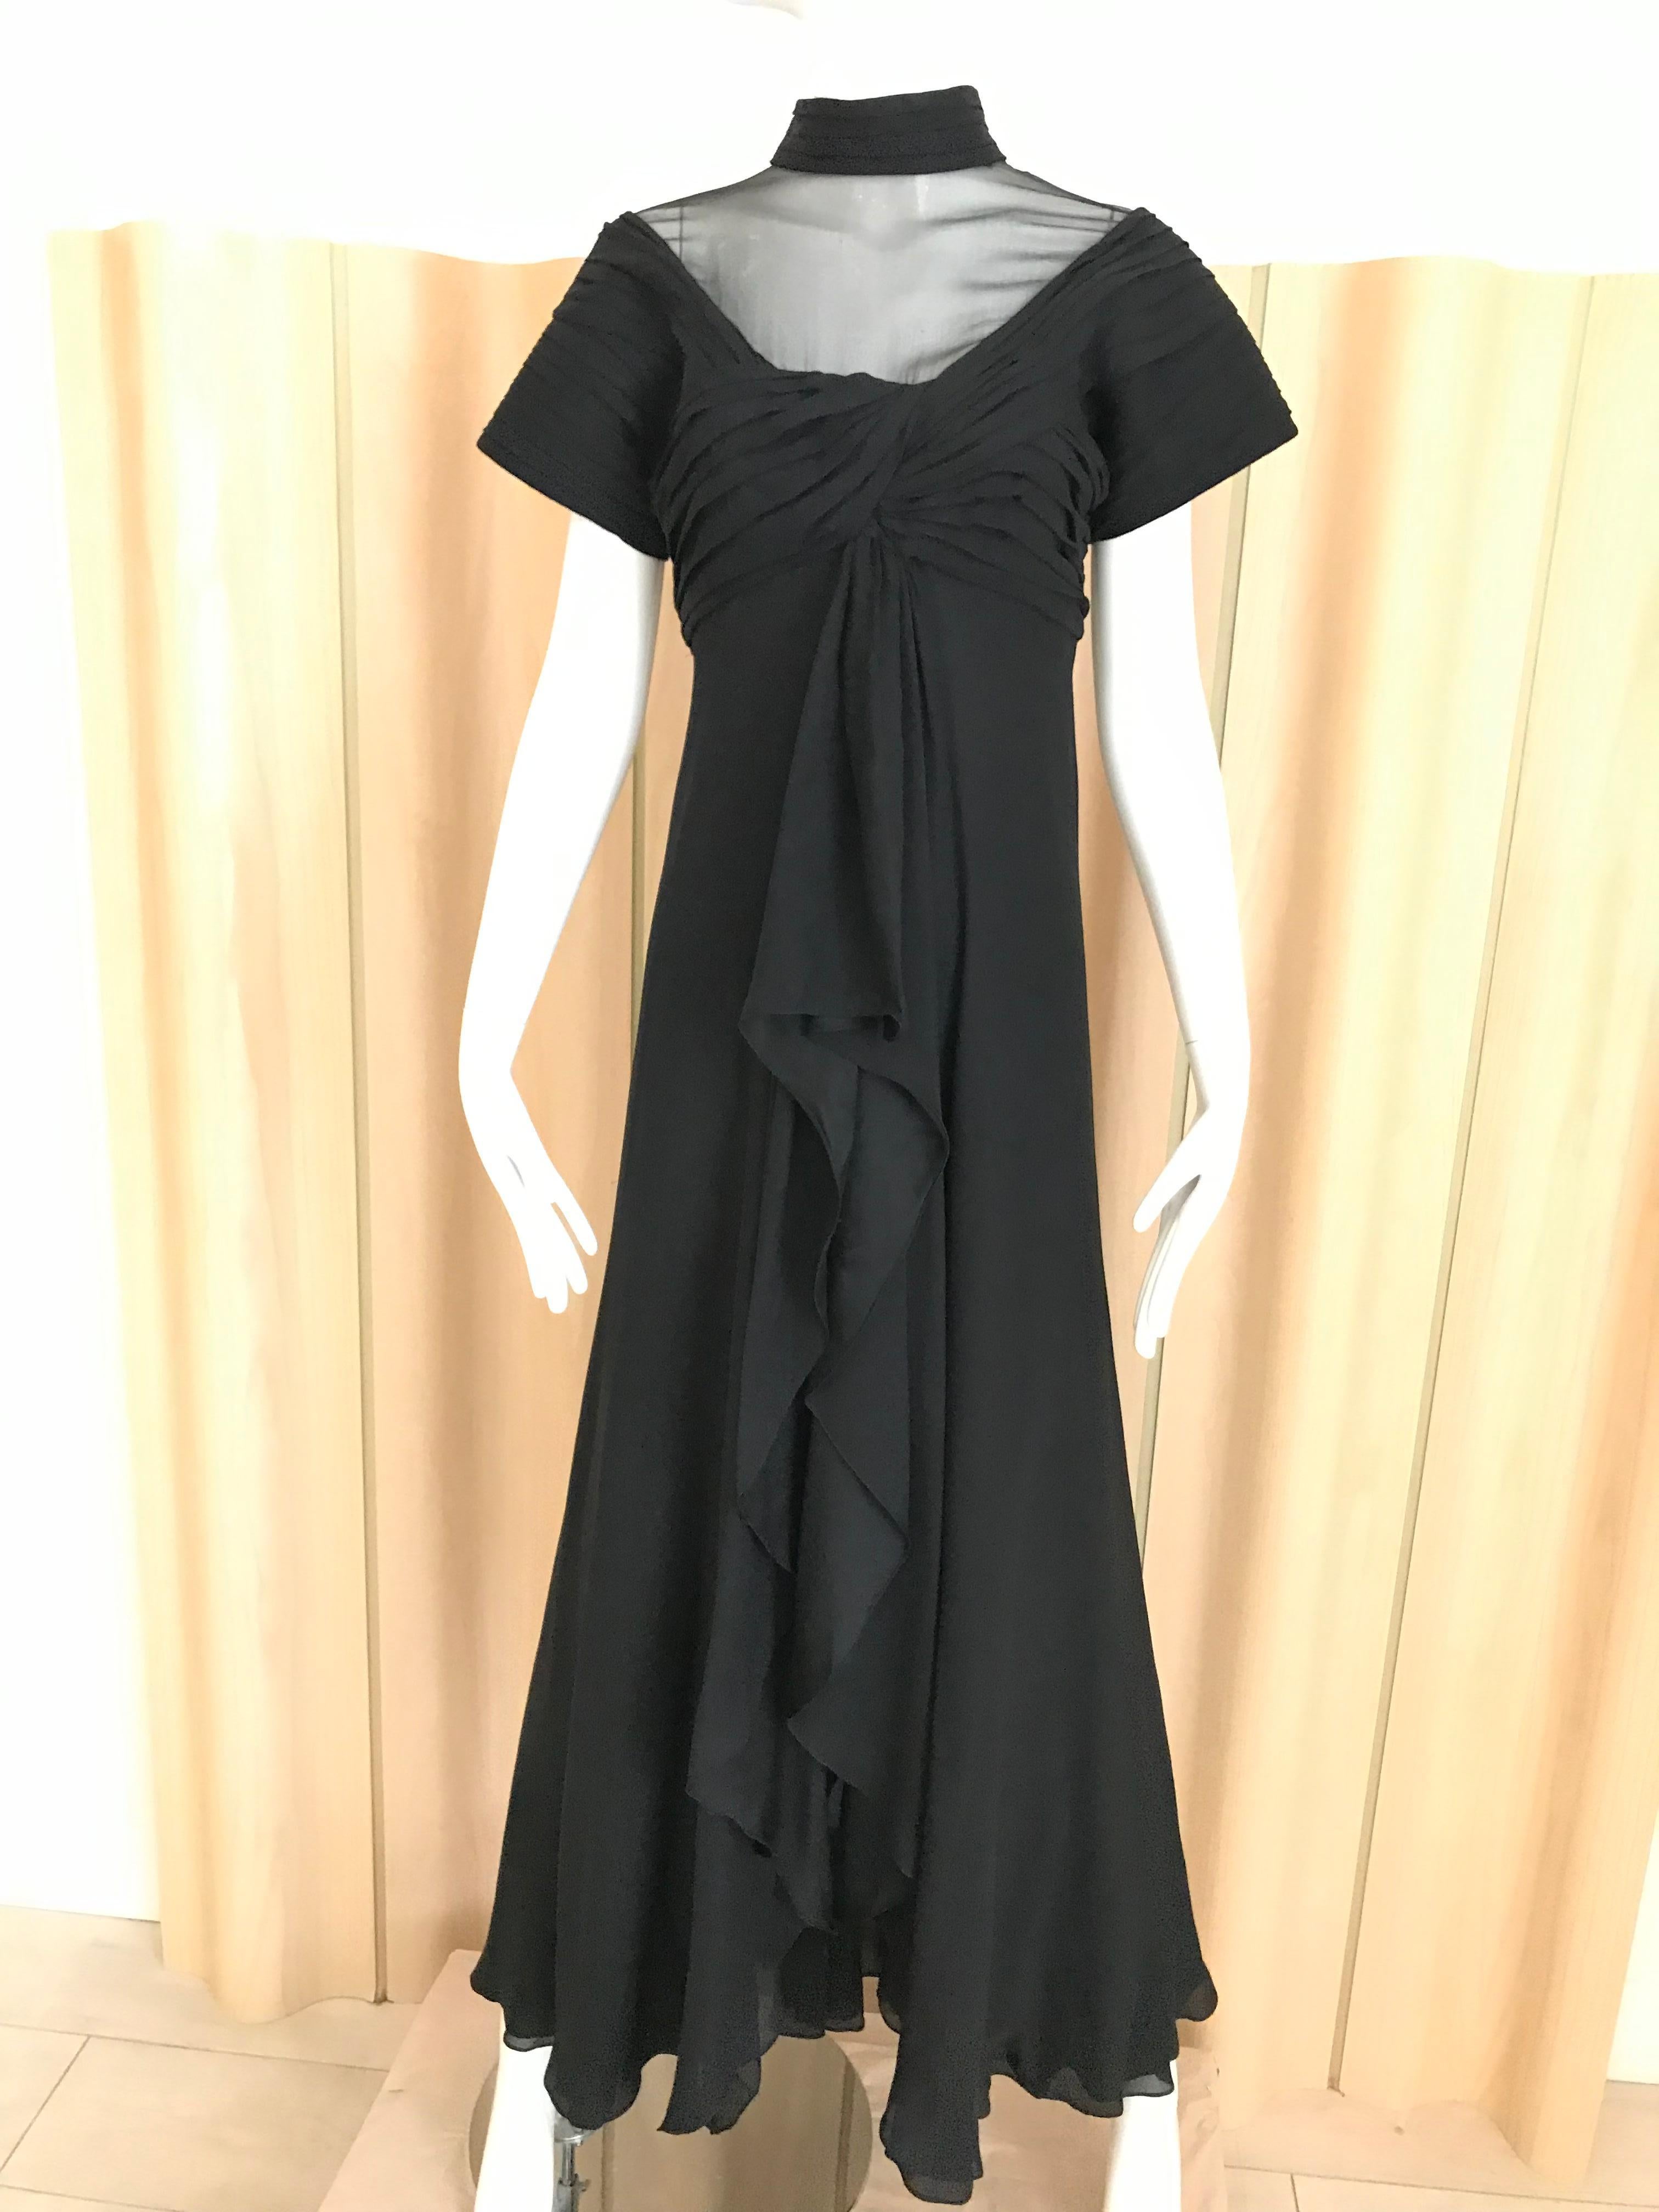 1980s Vintage Jacqueline De Ribes black silk chiffon illusion gown.
Bust; 34 inches
